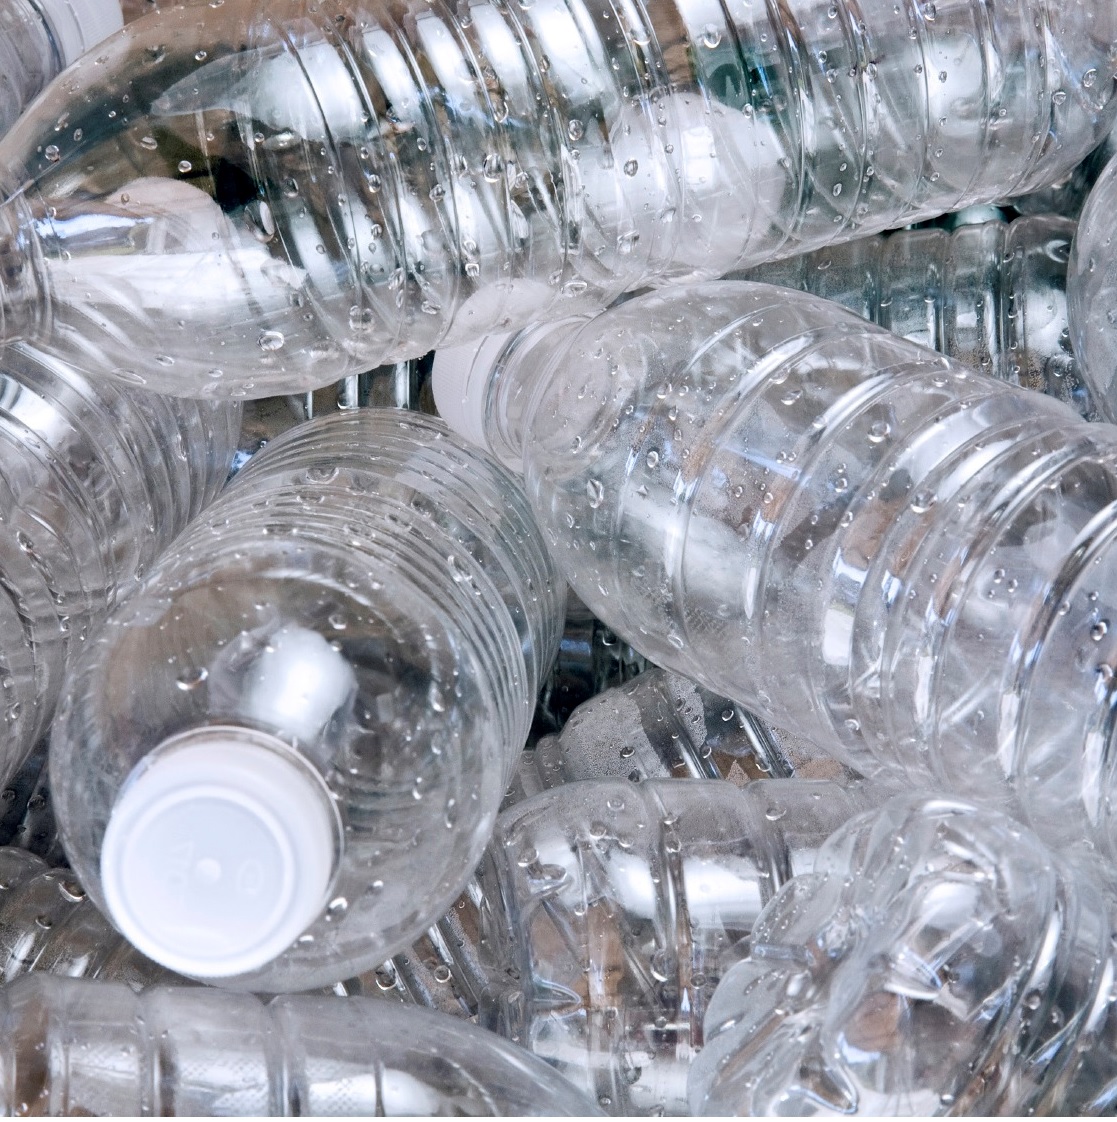 No more plastic water bottles